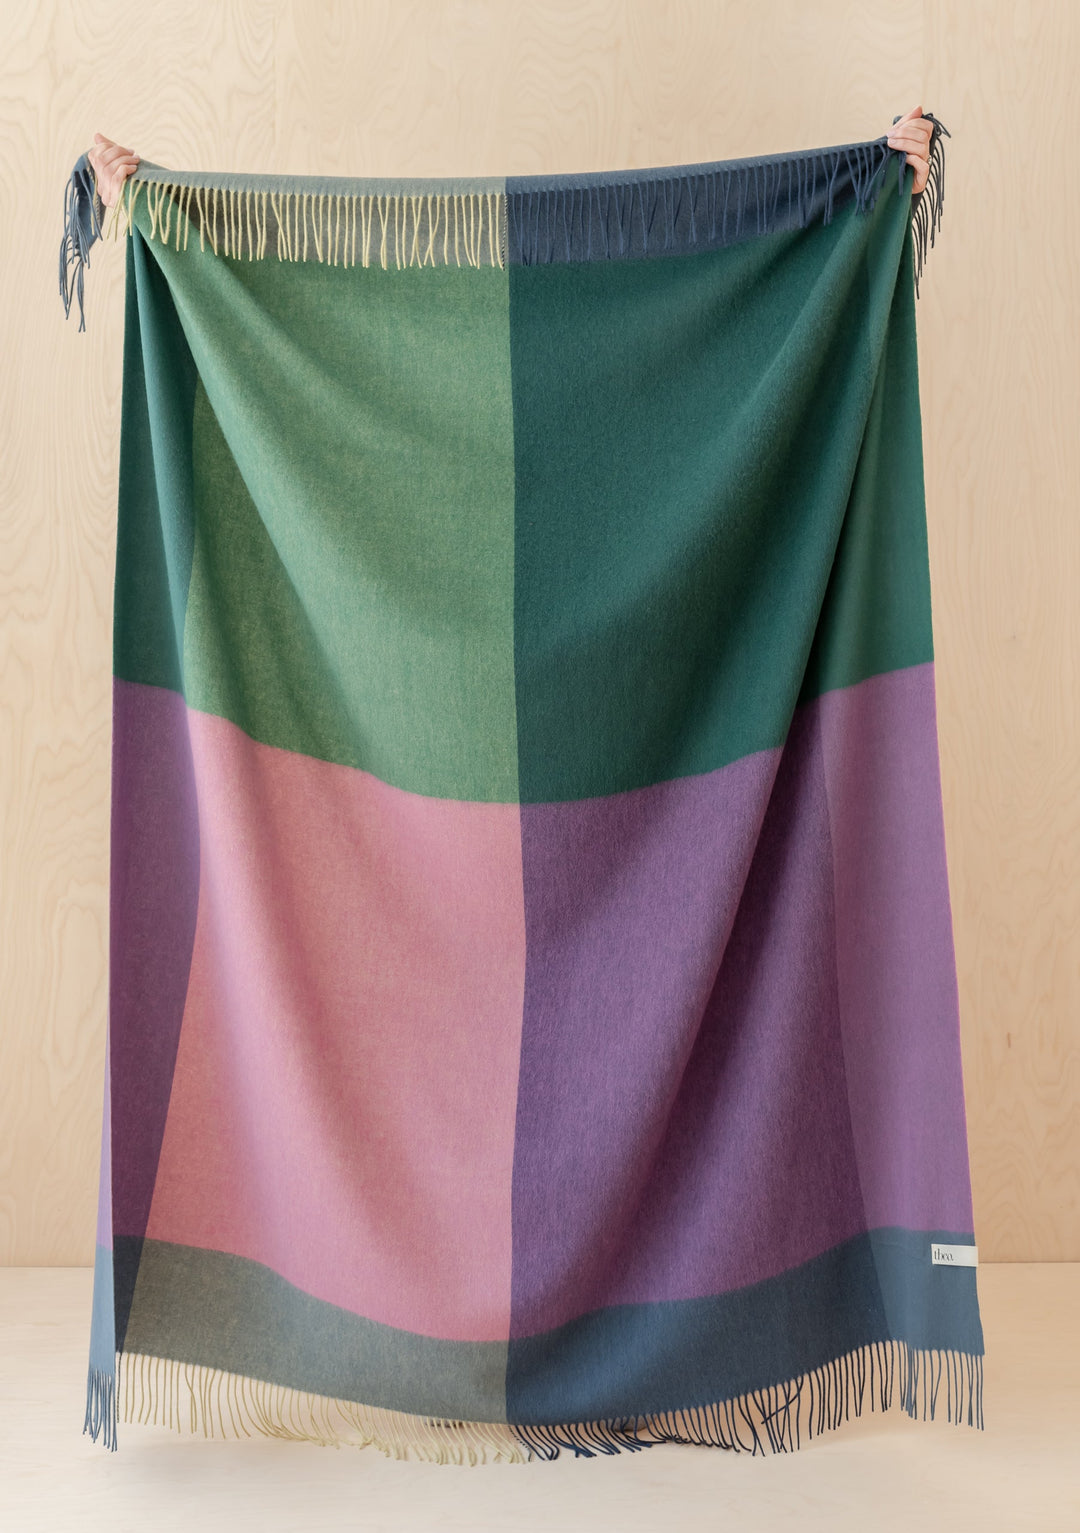 Decke aus Lammwolle mit türkisfarbenem Rahmenkaro